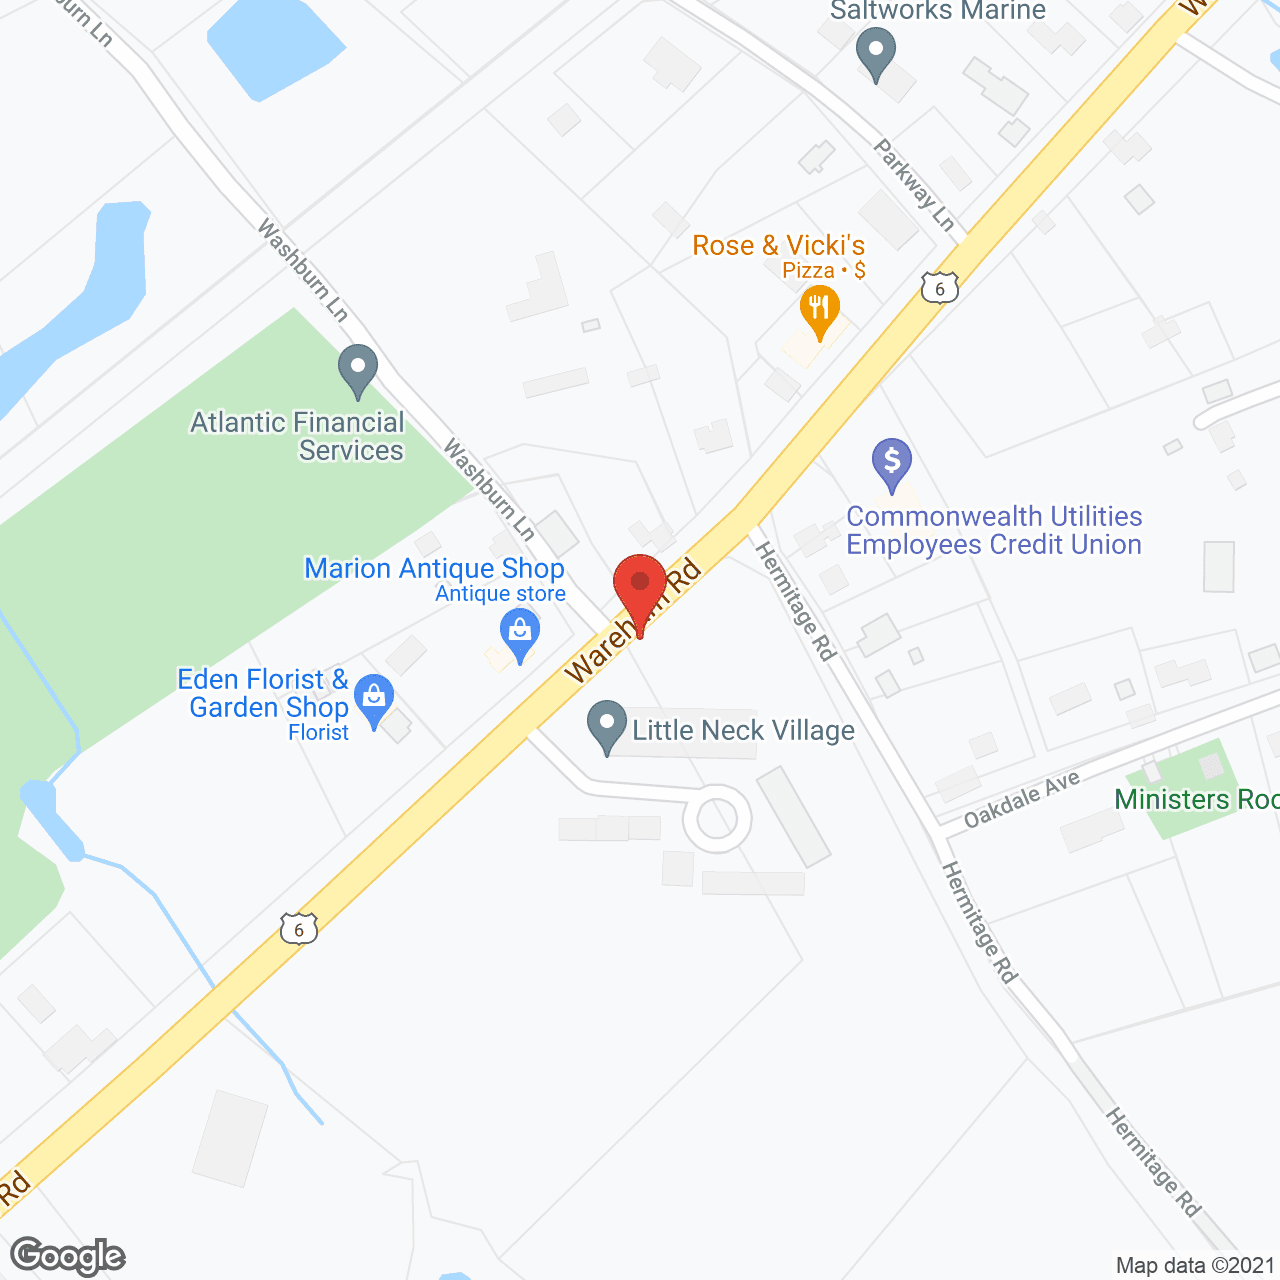 Little Neck Village in google map